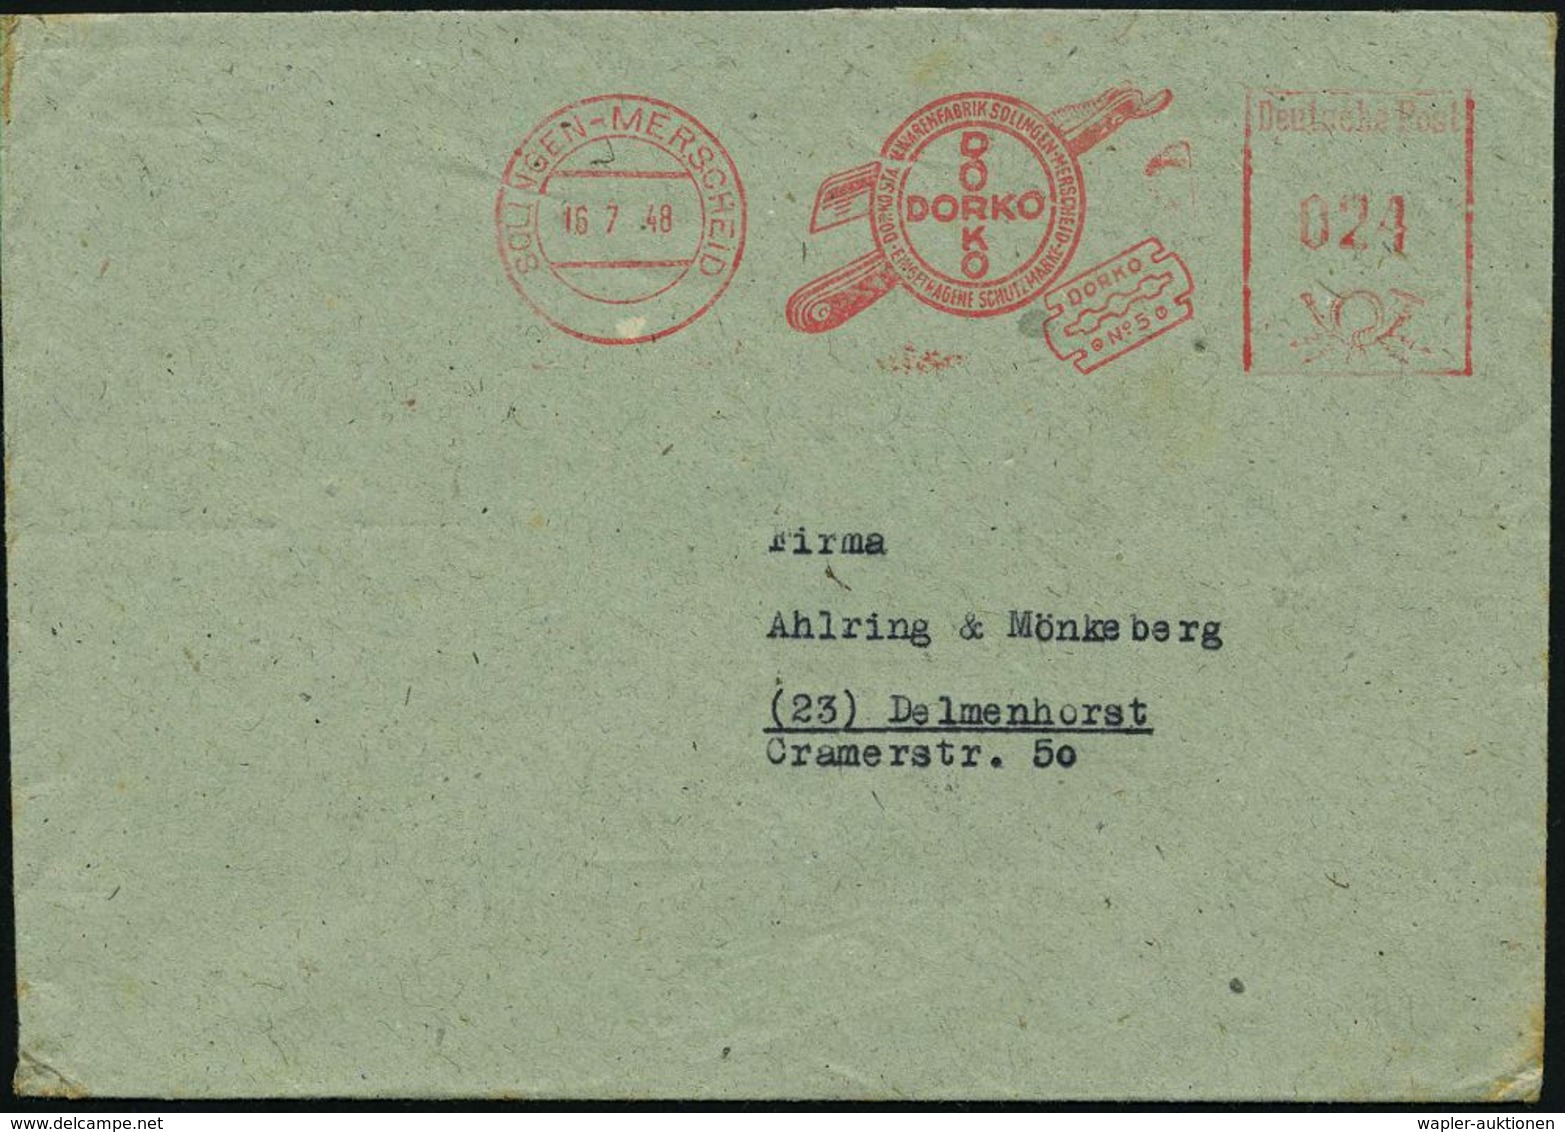 HAAR / BART / RASUR / FRISEUR : SOLINGEN-MERSCHEID/ DORKO STAHLWARENFABRIK.. 1948 (16.7.) AFS = Klapp-Rasiermesse (u. Ra - Pharmacy